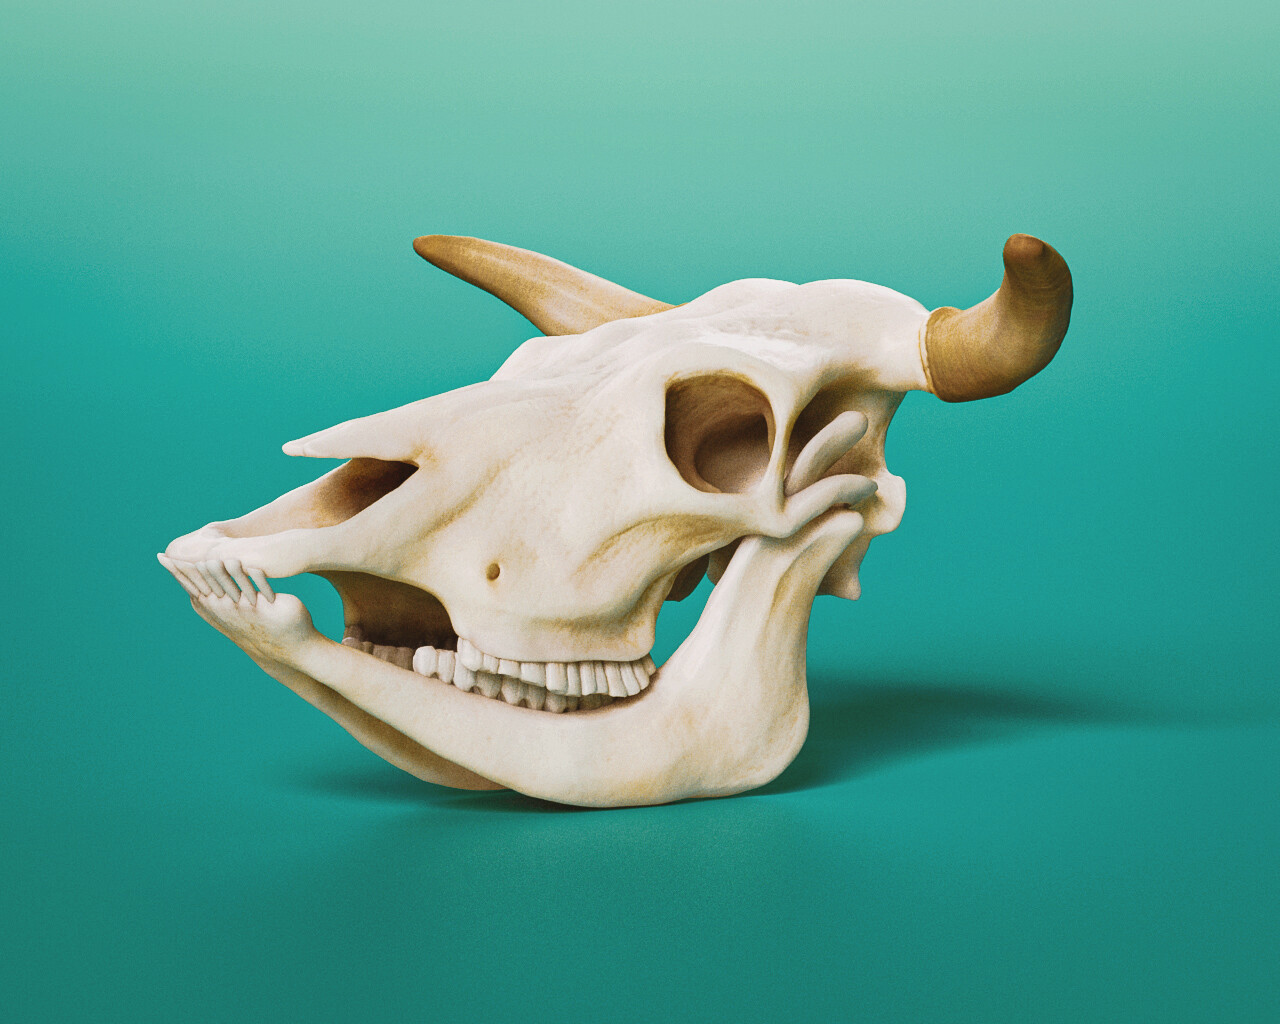 Cow Skull - Digital study